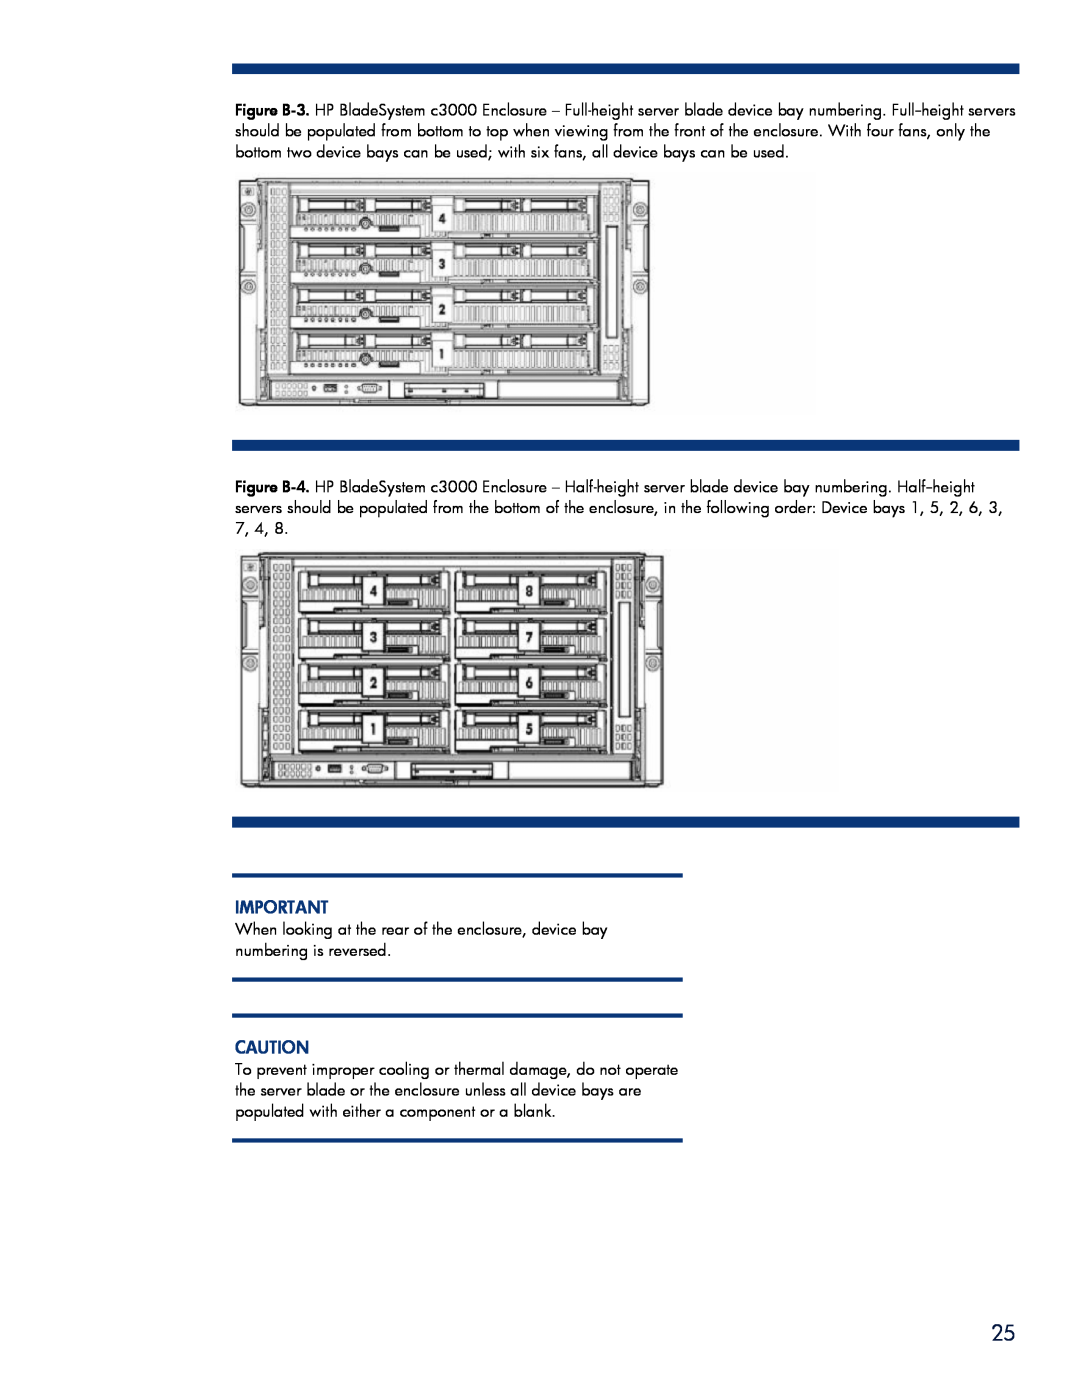 HP BladeSystem Enclosure technologies manual 